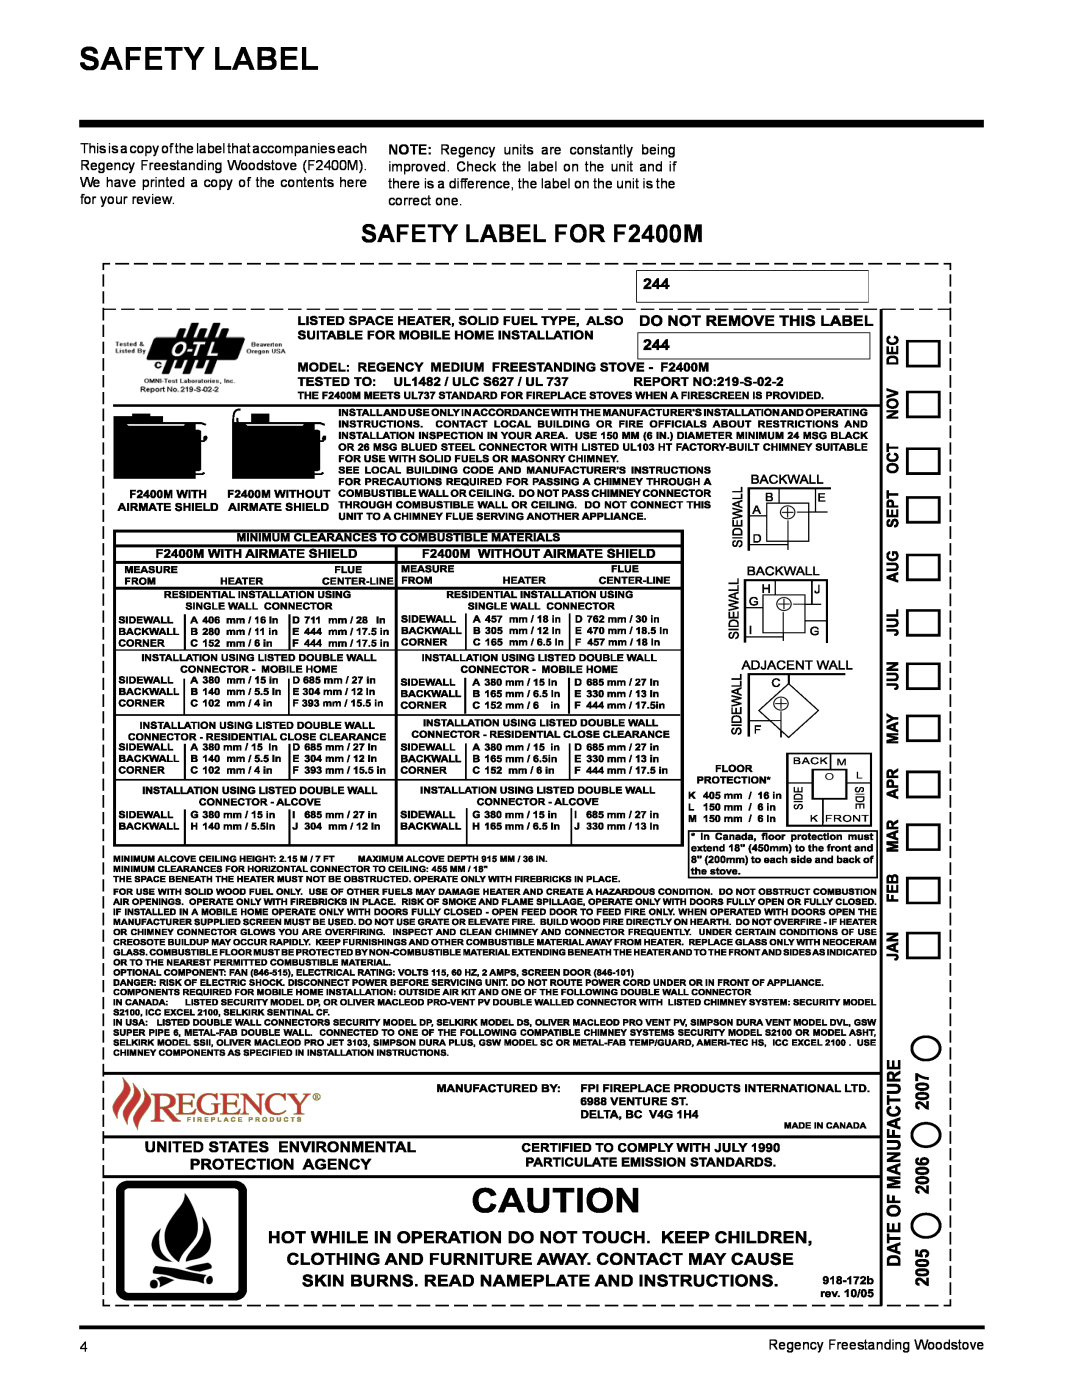 Regency S2400M installation manual Safety Label, SAFETY LABEL FOR F2400M 